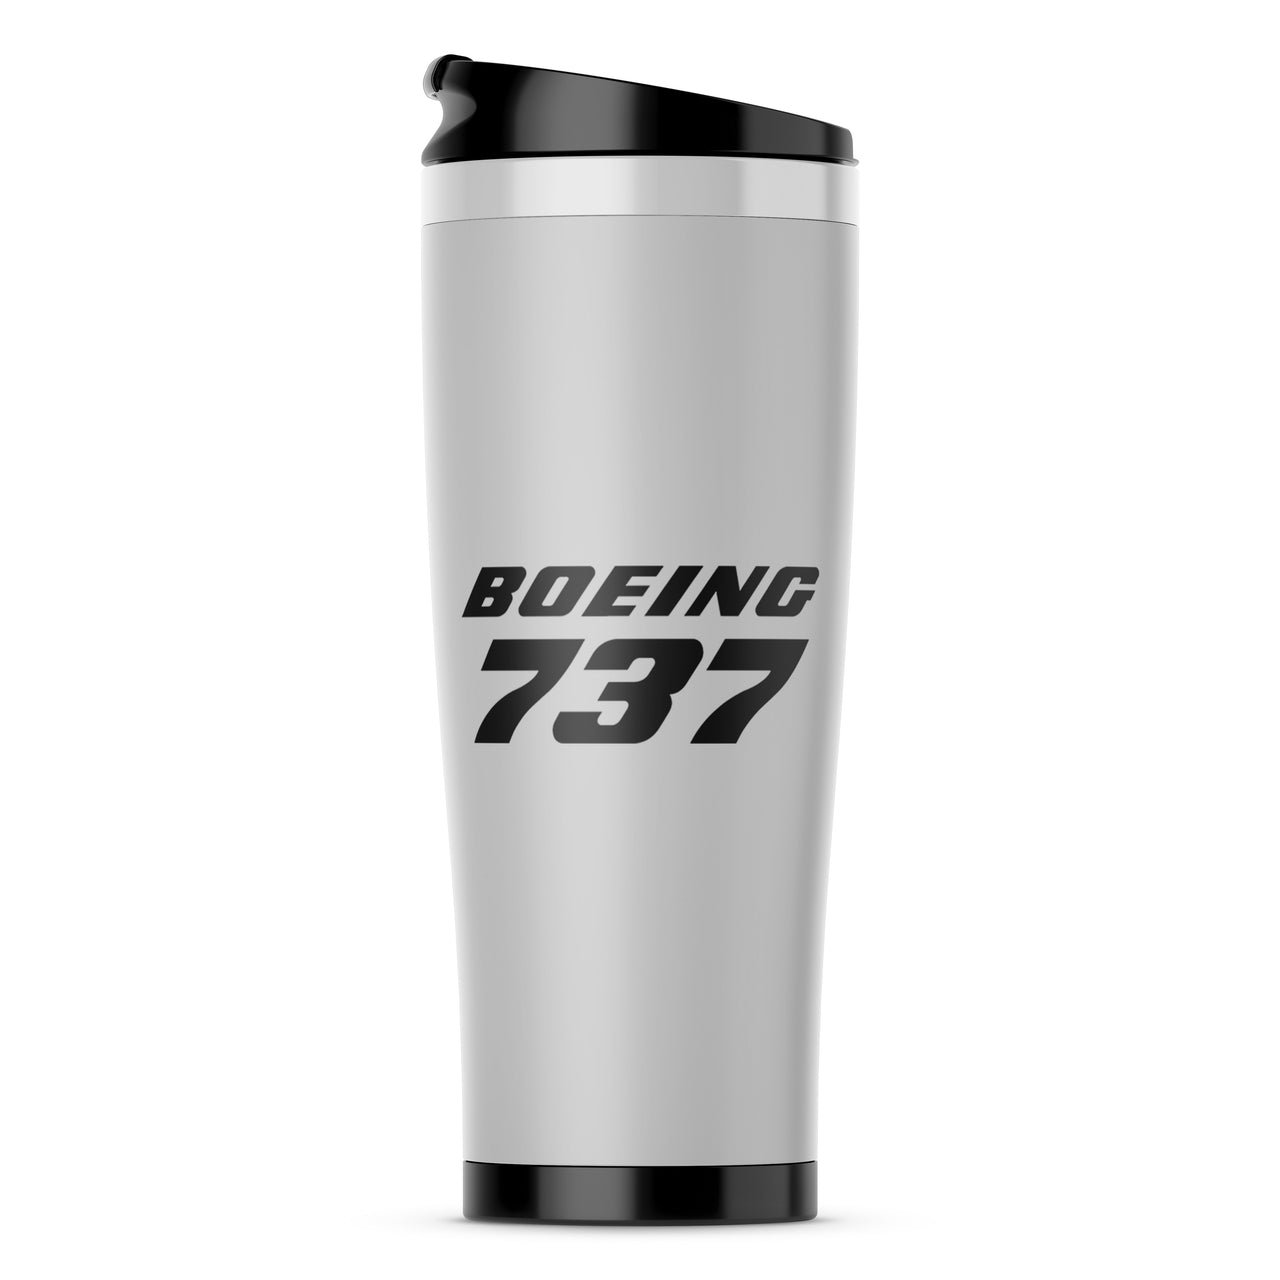 Boeing 737 & Text Designed Travel Mugs